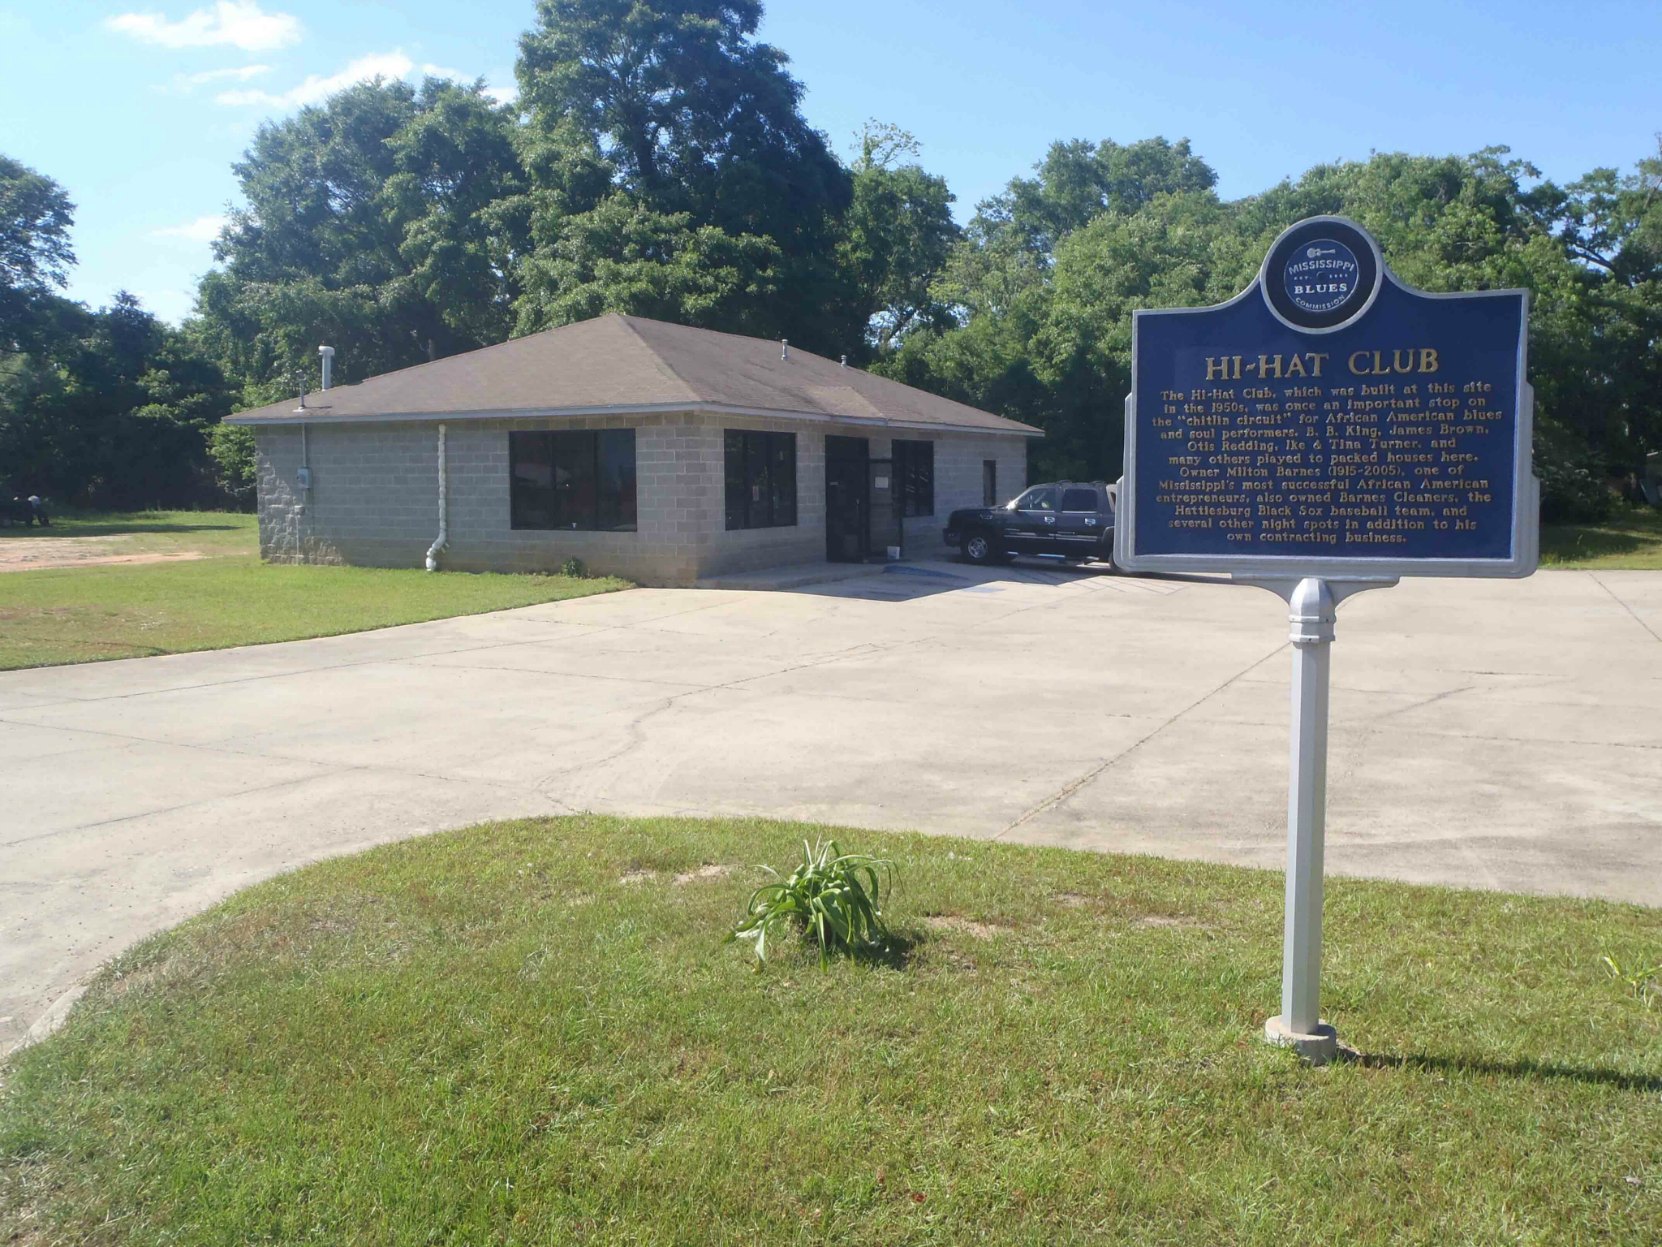 Mississippi Blues Trail marker commemorating the Hi-Hat Club, Hattiesburg, Mississippi